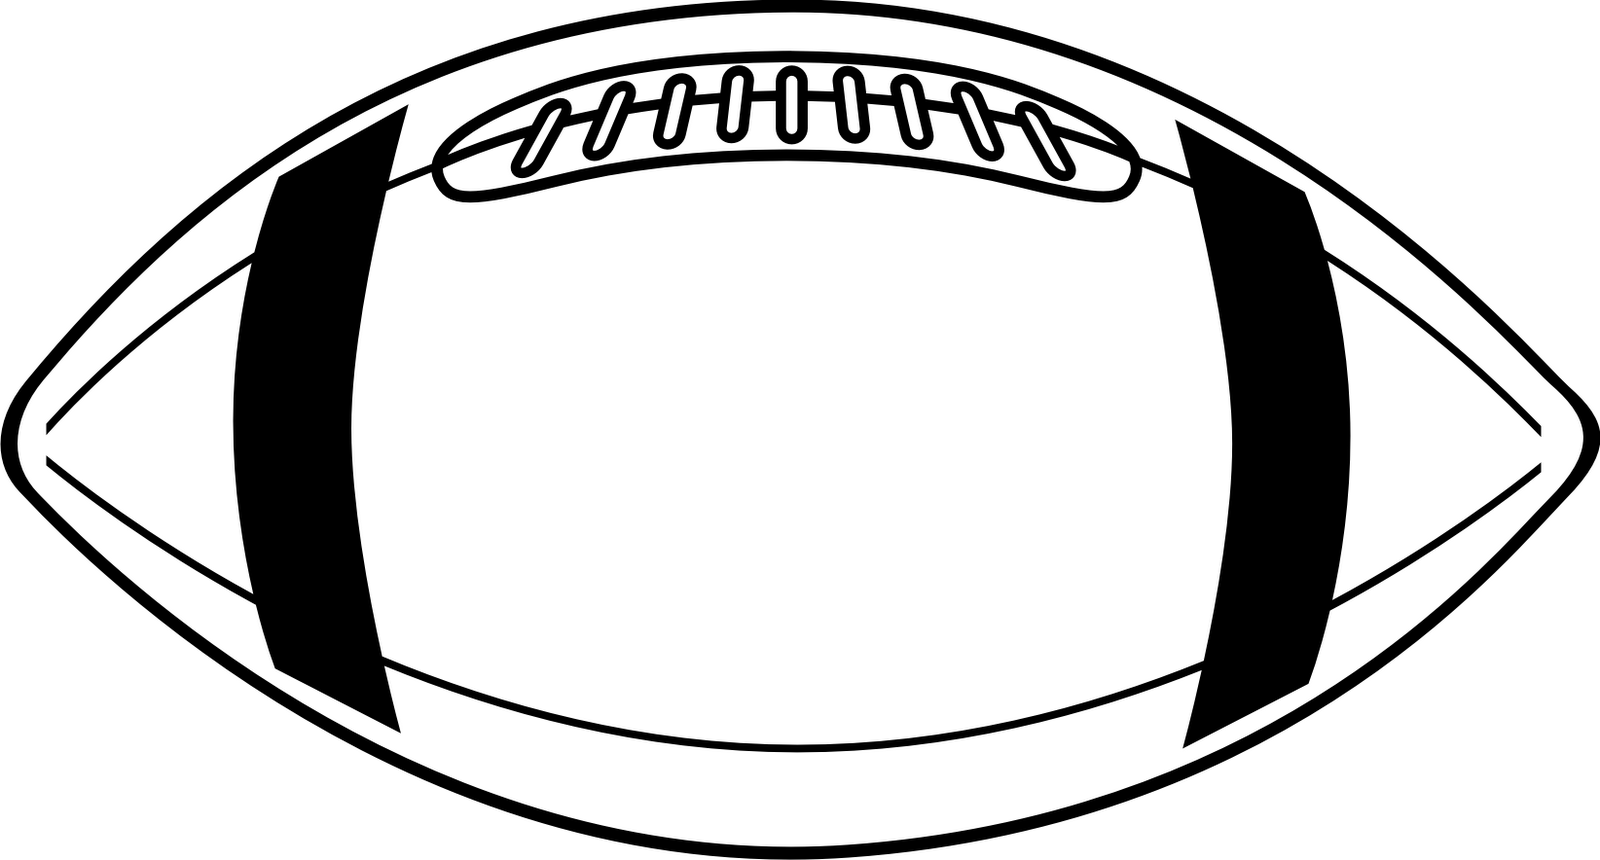 Football field football laces clip art